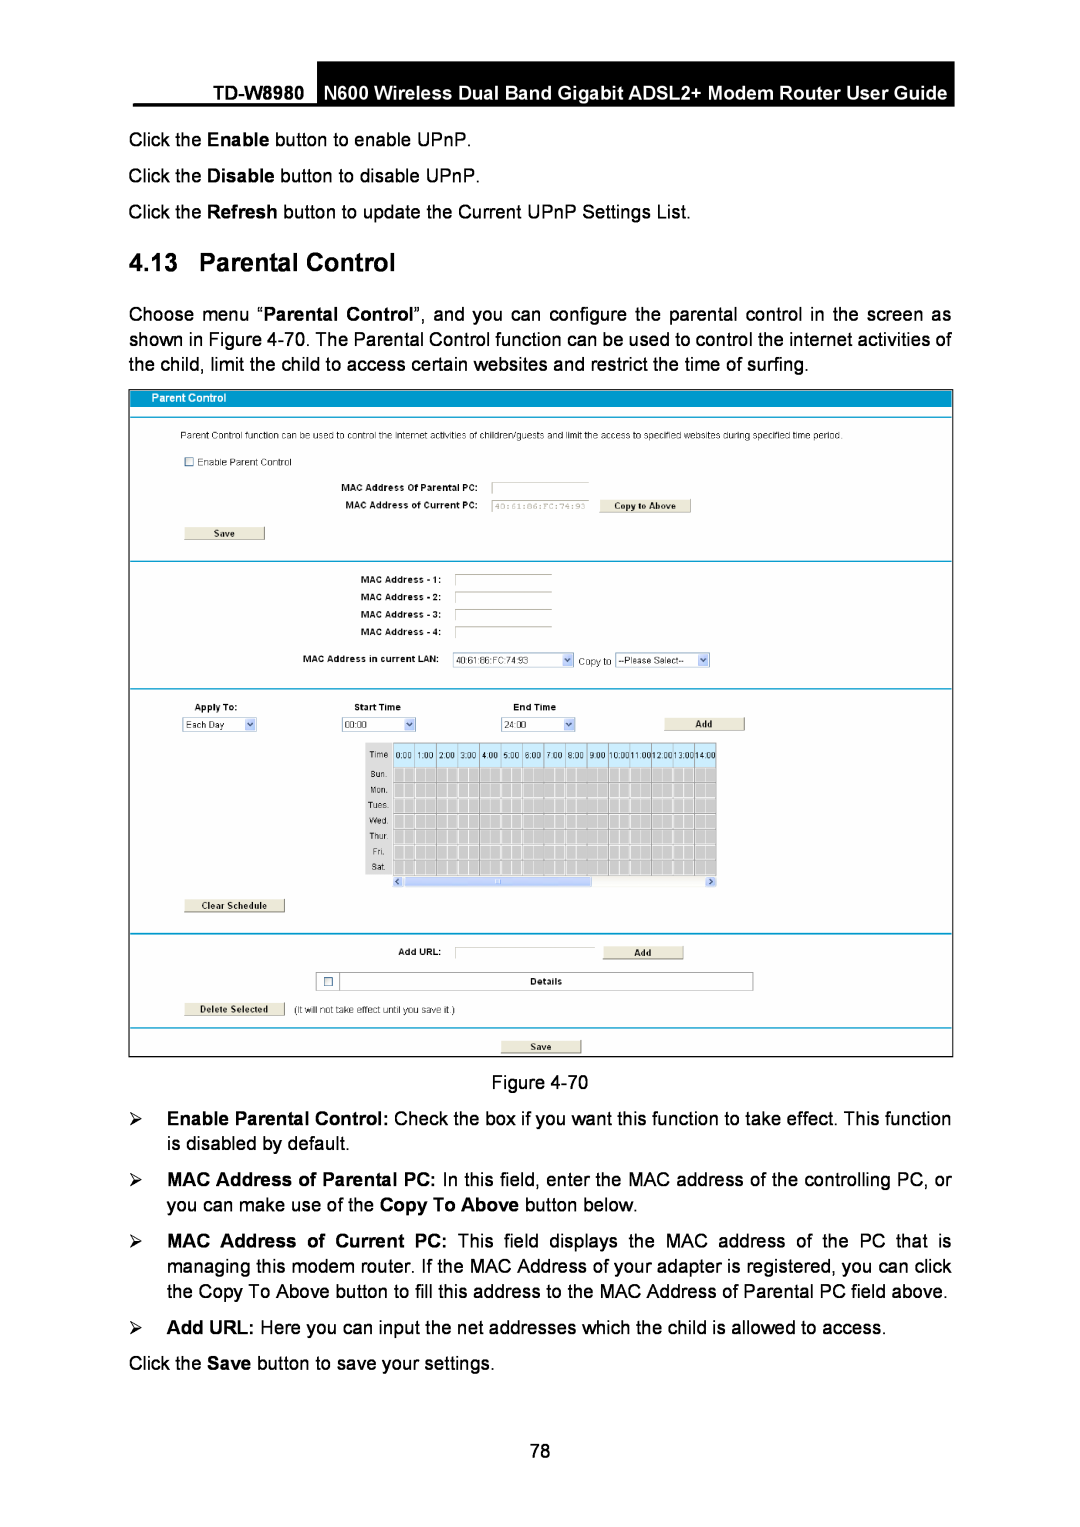 TP-Link TD-W8980 manual Parental Control, N600 Wireless Dual Band Gigabit ADSL2+ Modem Router User Guide 